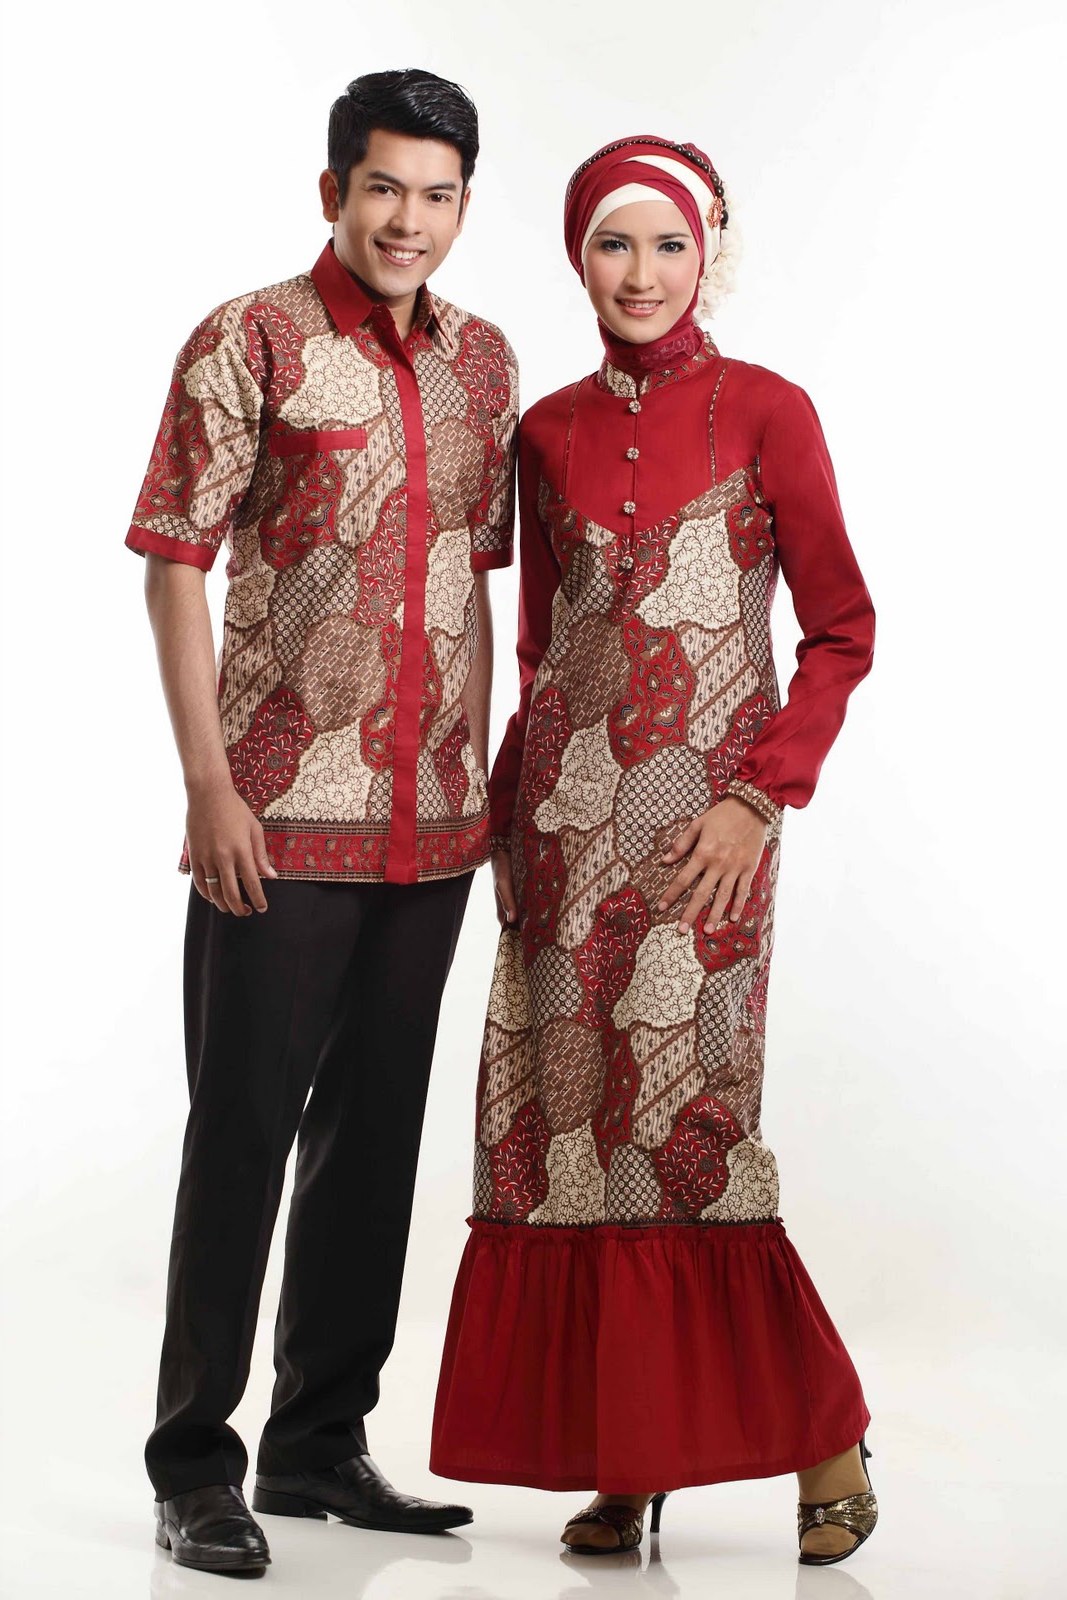 Inspirasi Gambar Baju Lebaran Anak Ftd8 Bintang anda Trend Model Baju Batik Lebaran Terbaru 2013